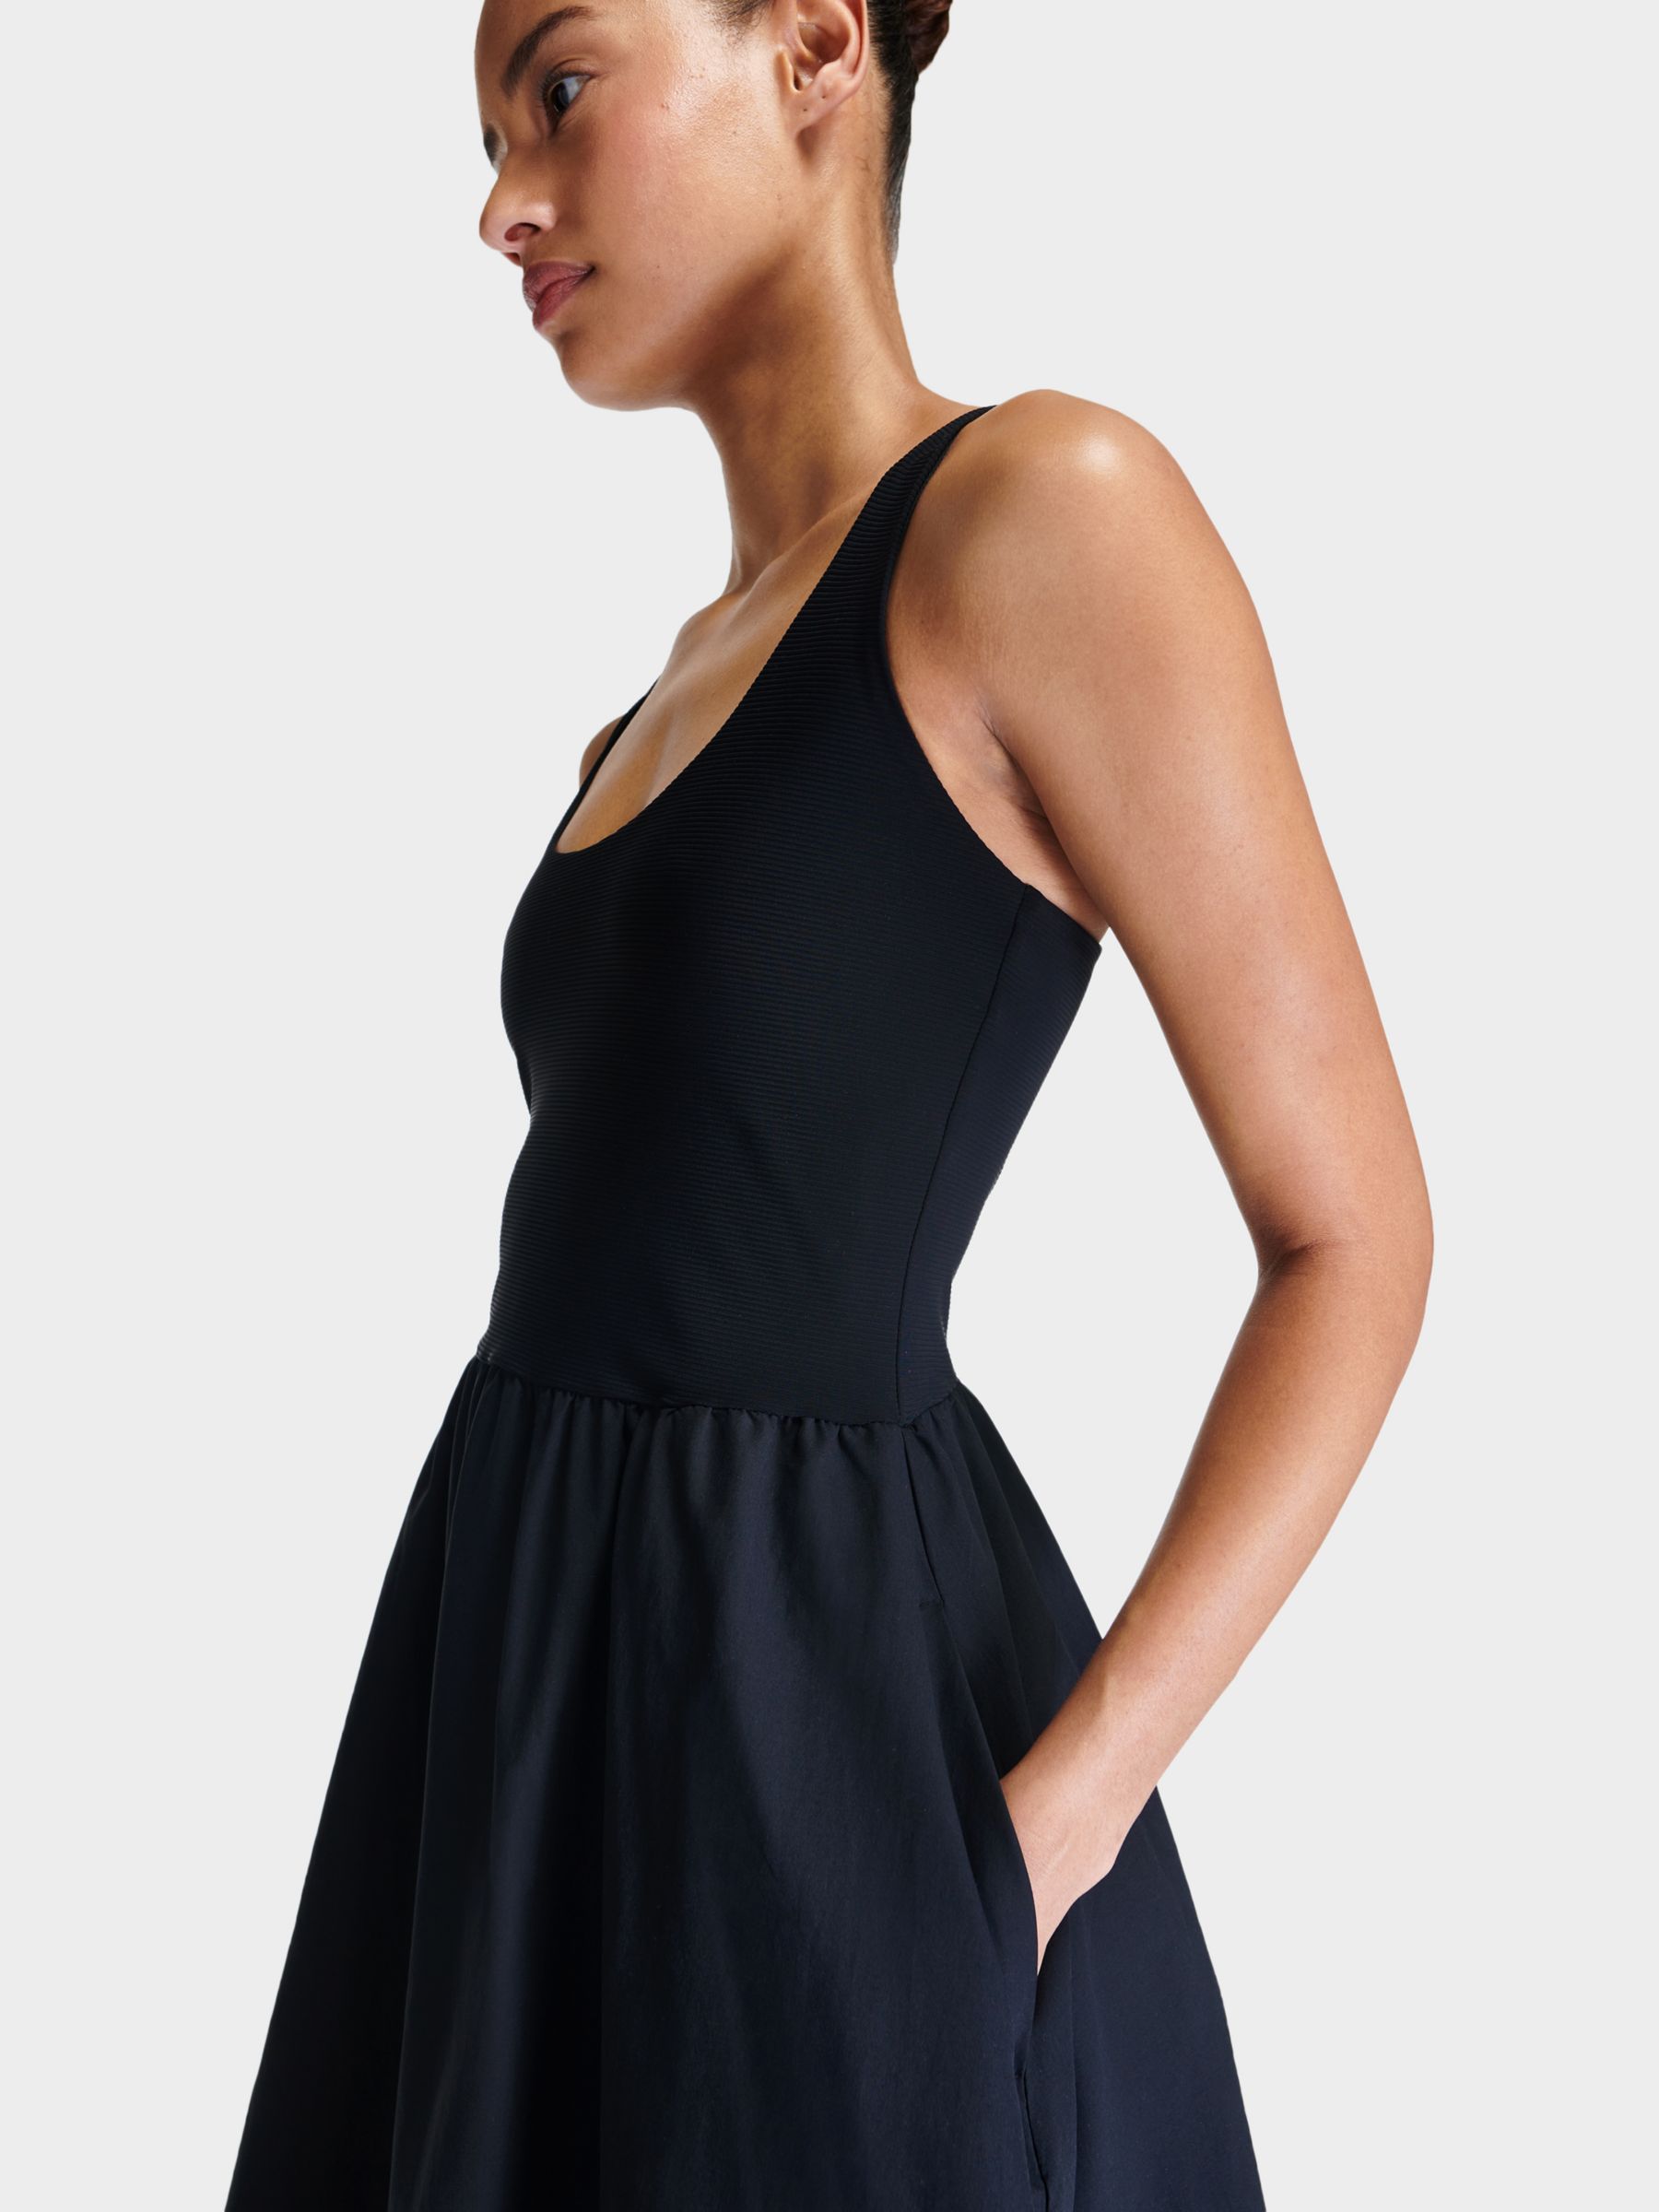 Sweaty Betty Explorer Ribbed Race Dress, Black, XXS